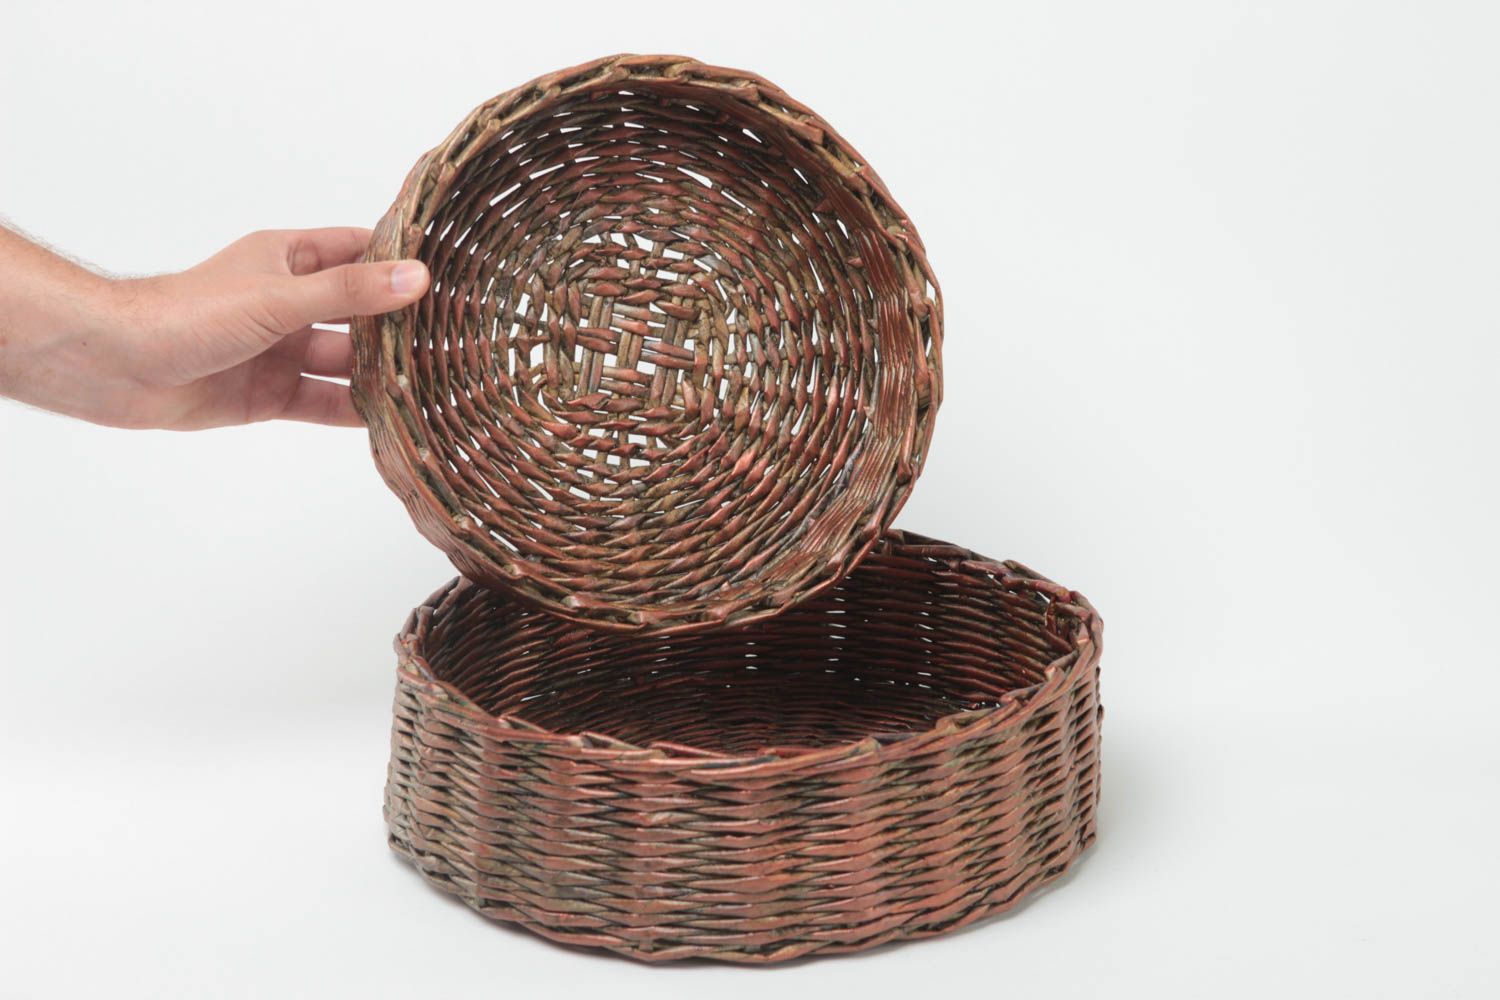 Handmade paper basket 2 newspaper baskets woven basket design gift ideas photo 5